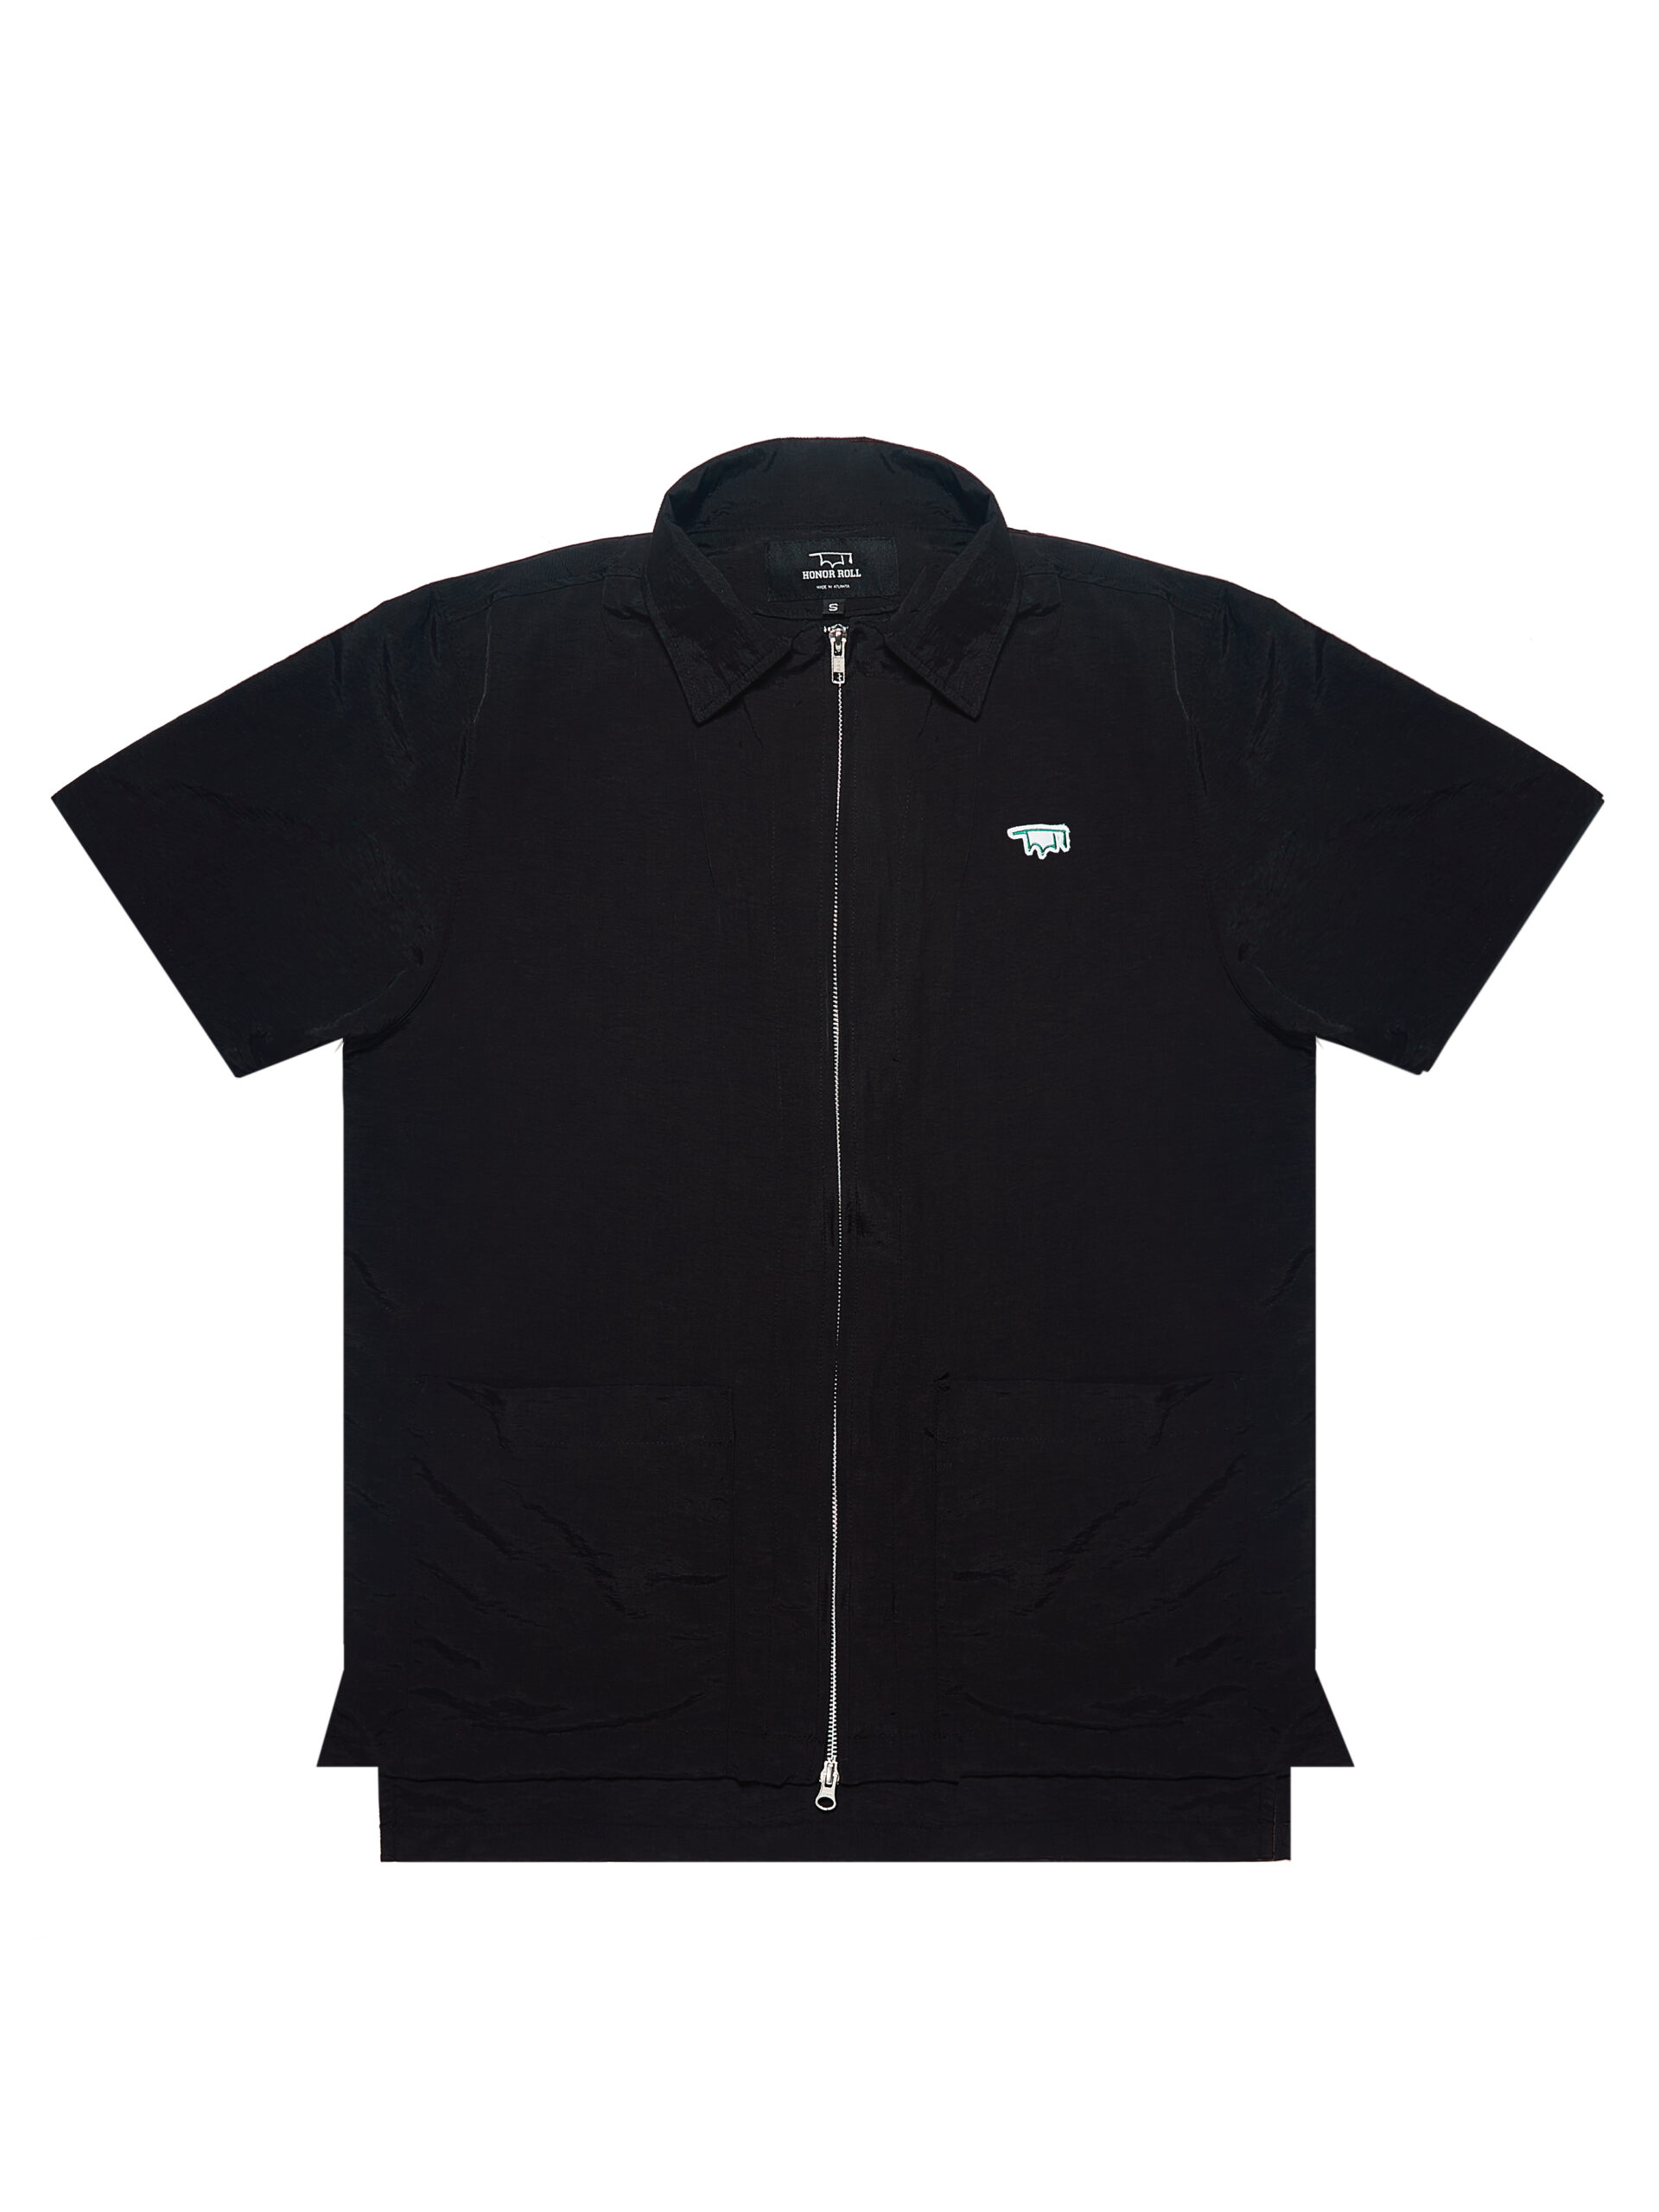 Chore Jacket - Black | Honor Roll Clothing